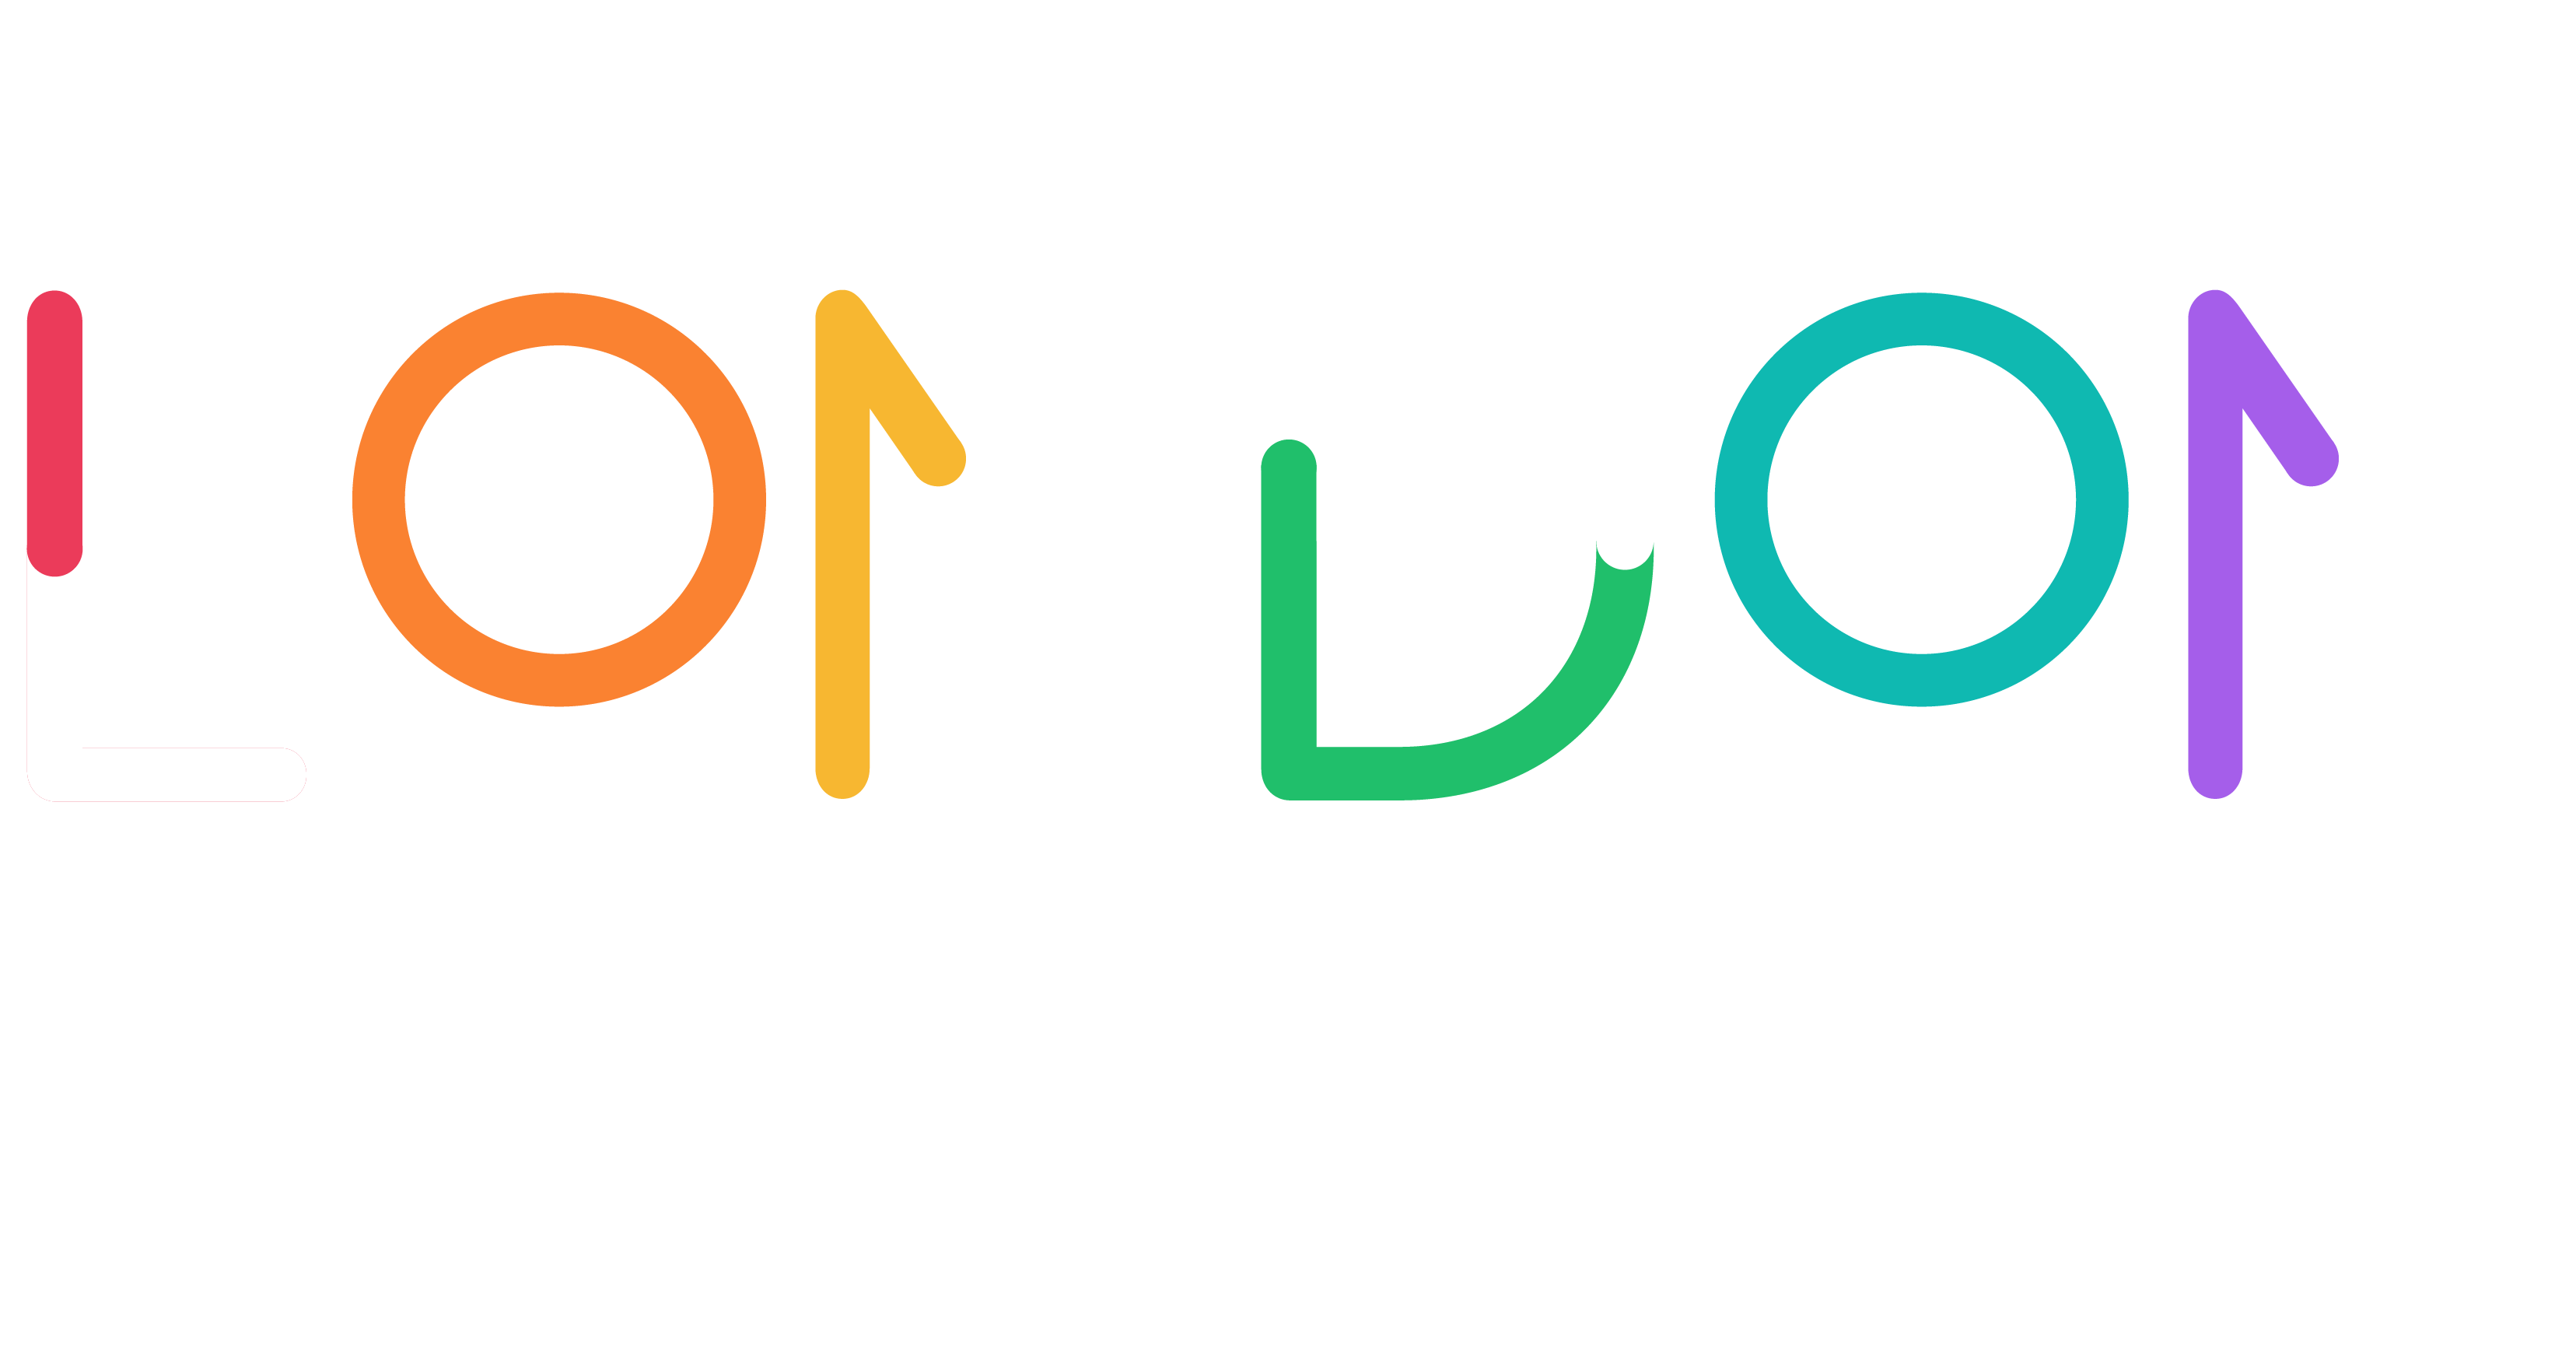 <font color="#ffffff">London Mobility Summit<br>&nbsp;2nd Edition&nbsp;</font><br>